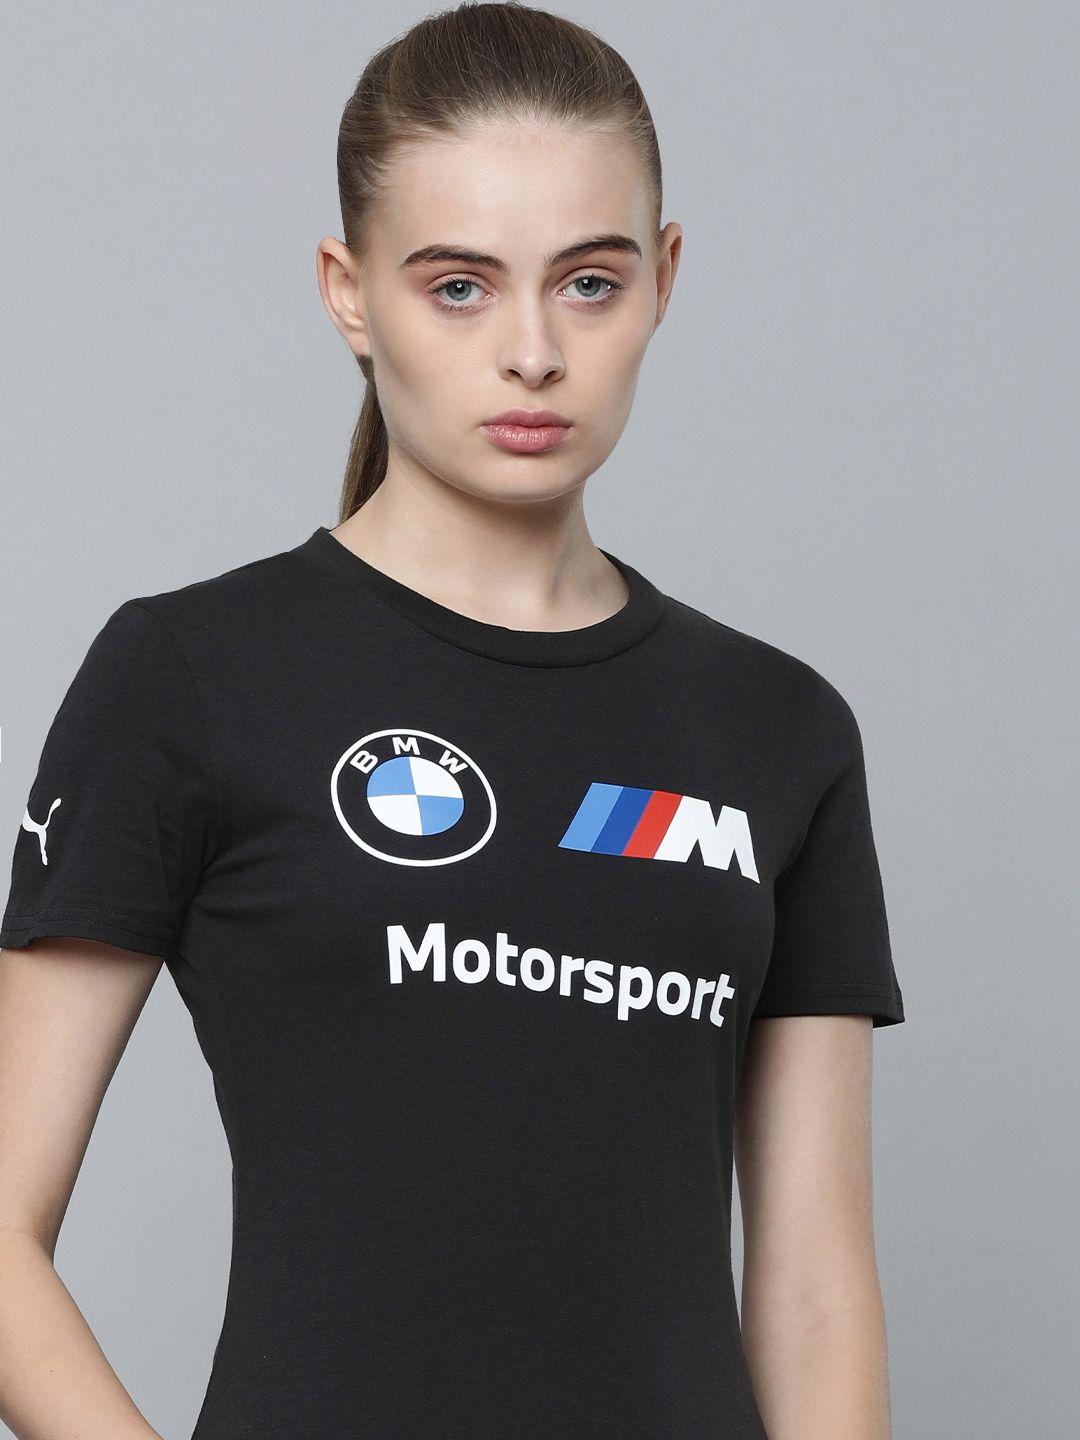 puma motorsport bmw m essential graphic printed t-shirt dress